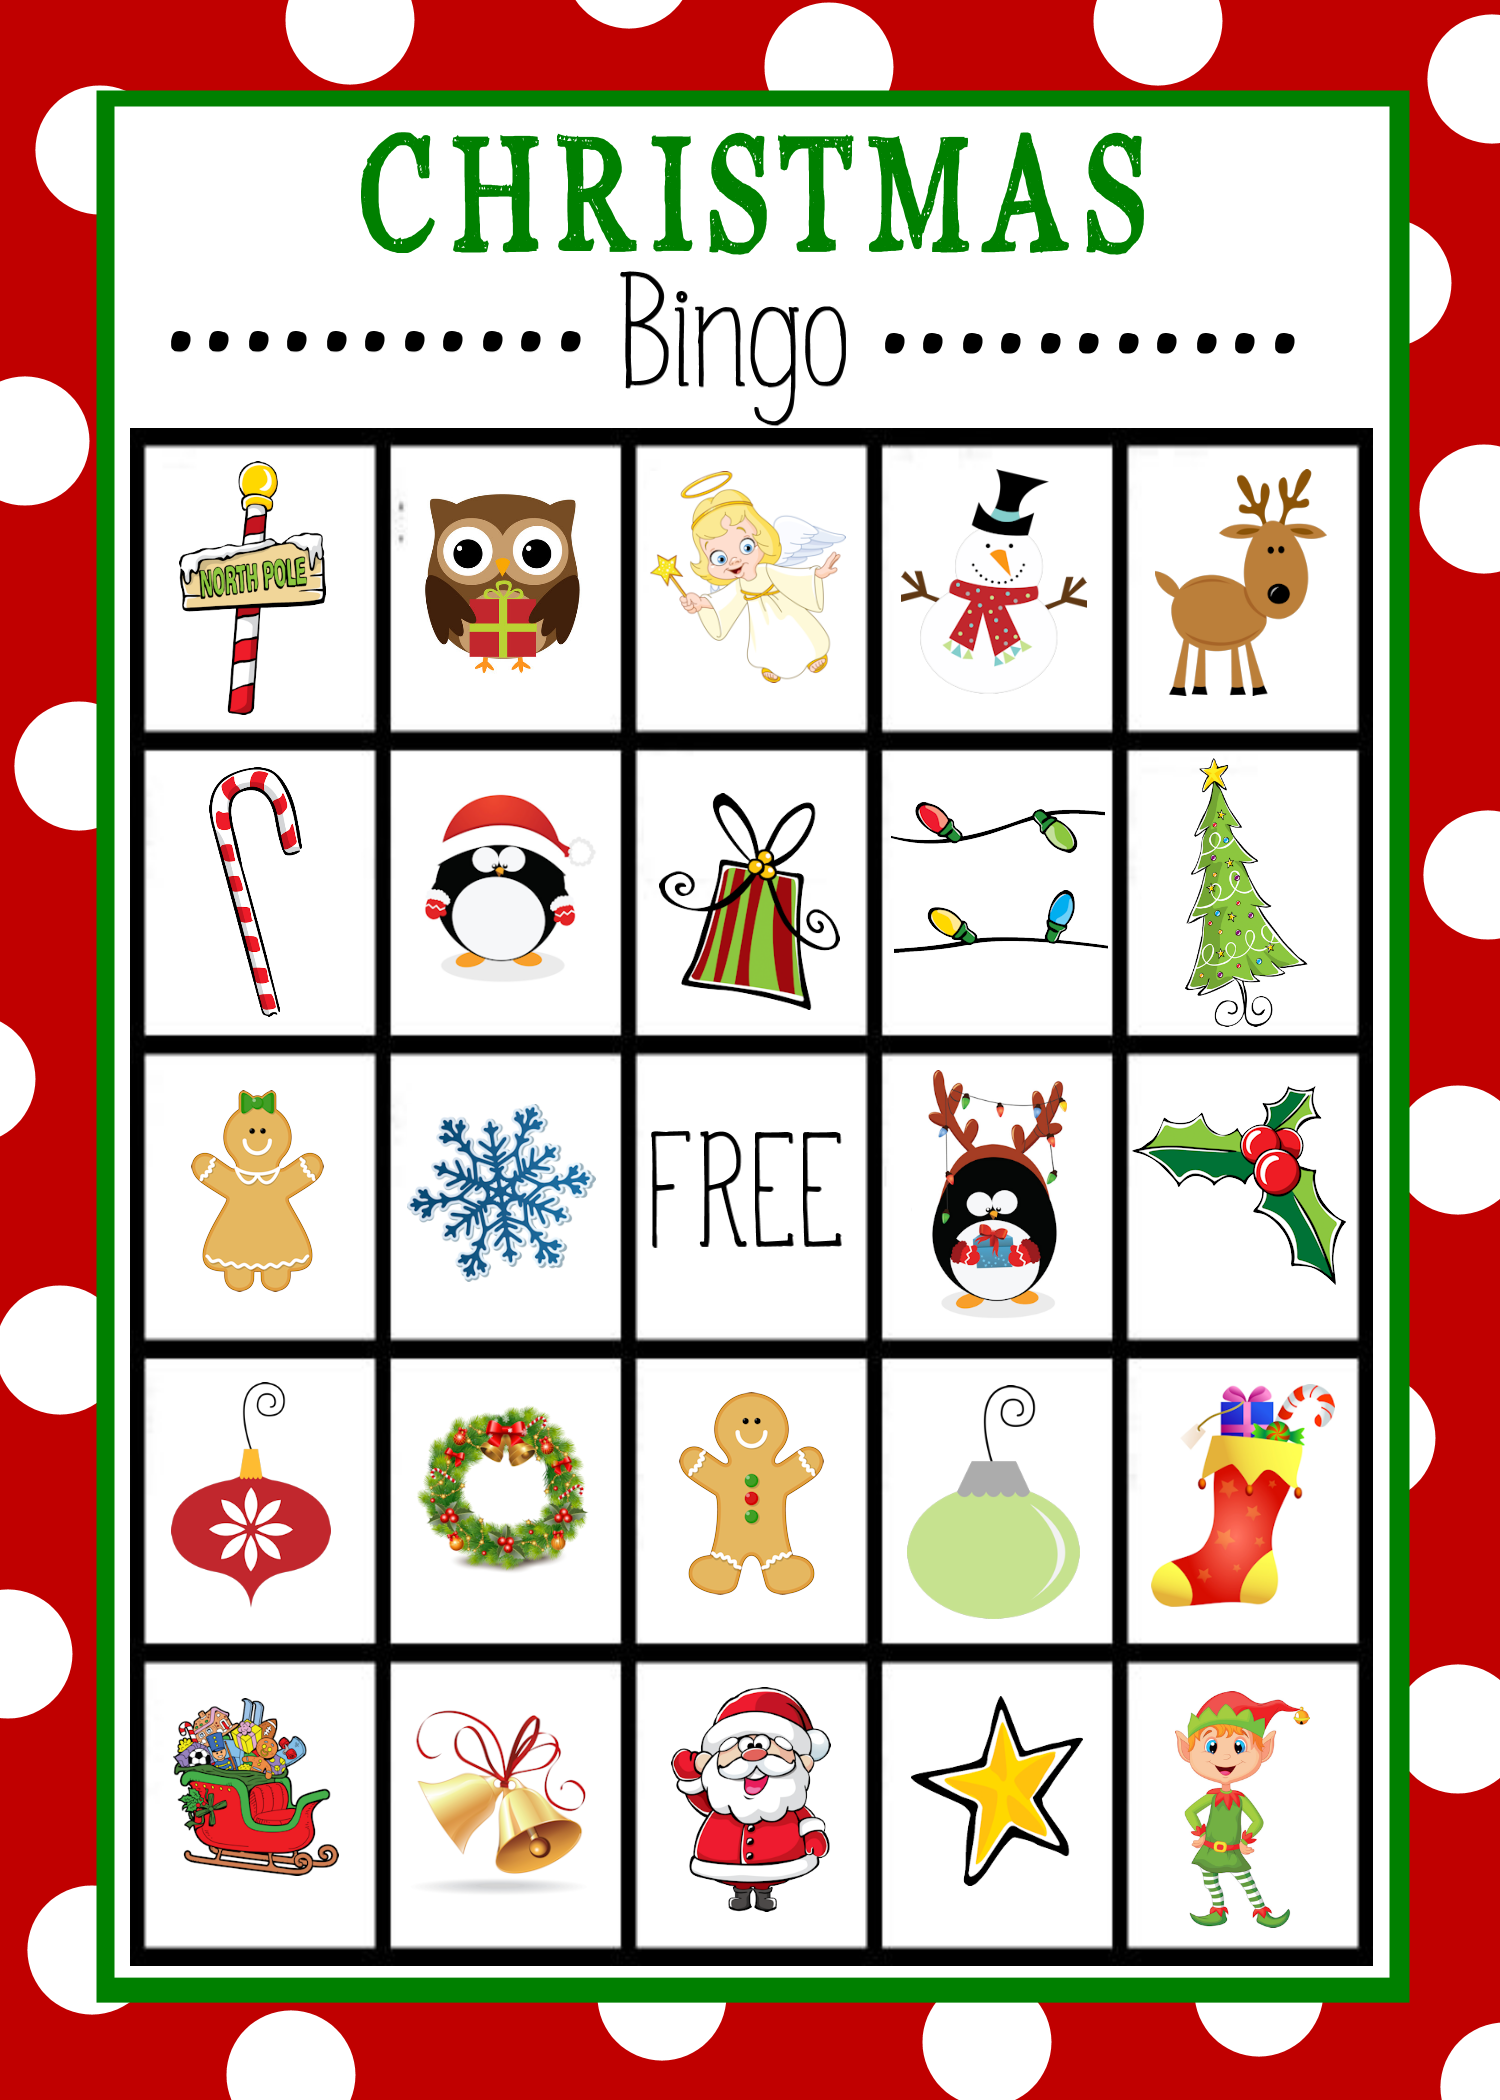 Free Printable Christmas Bingo Cards With Words